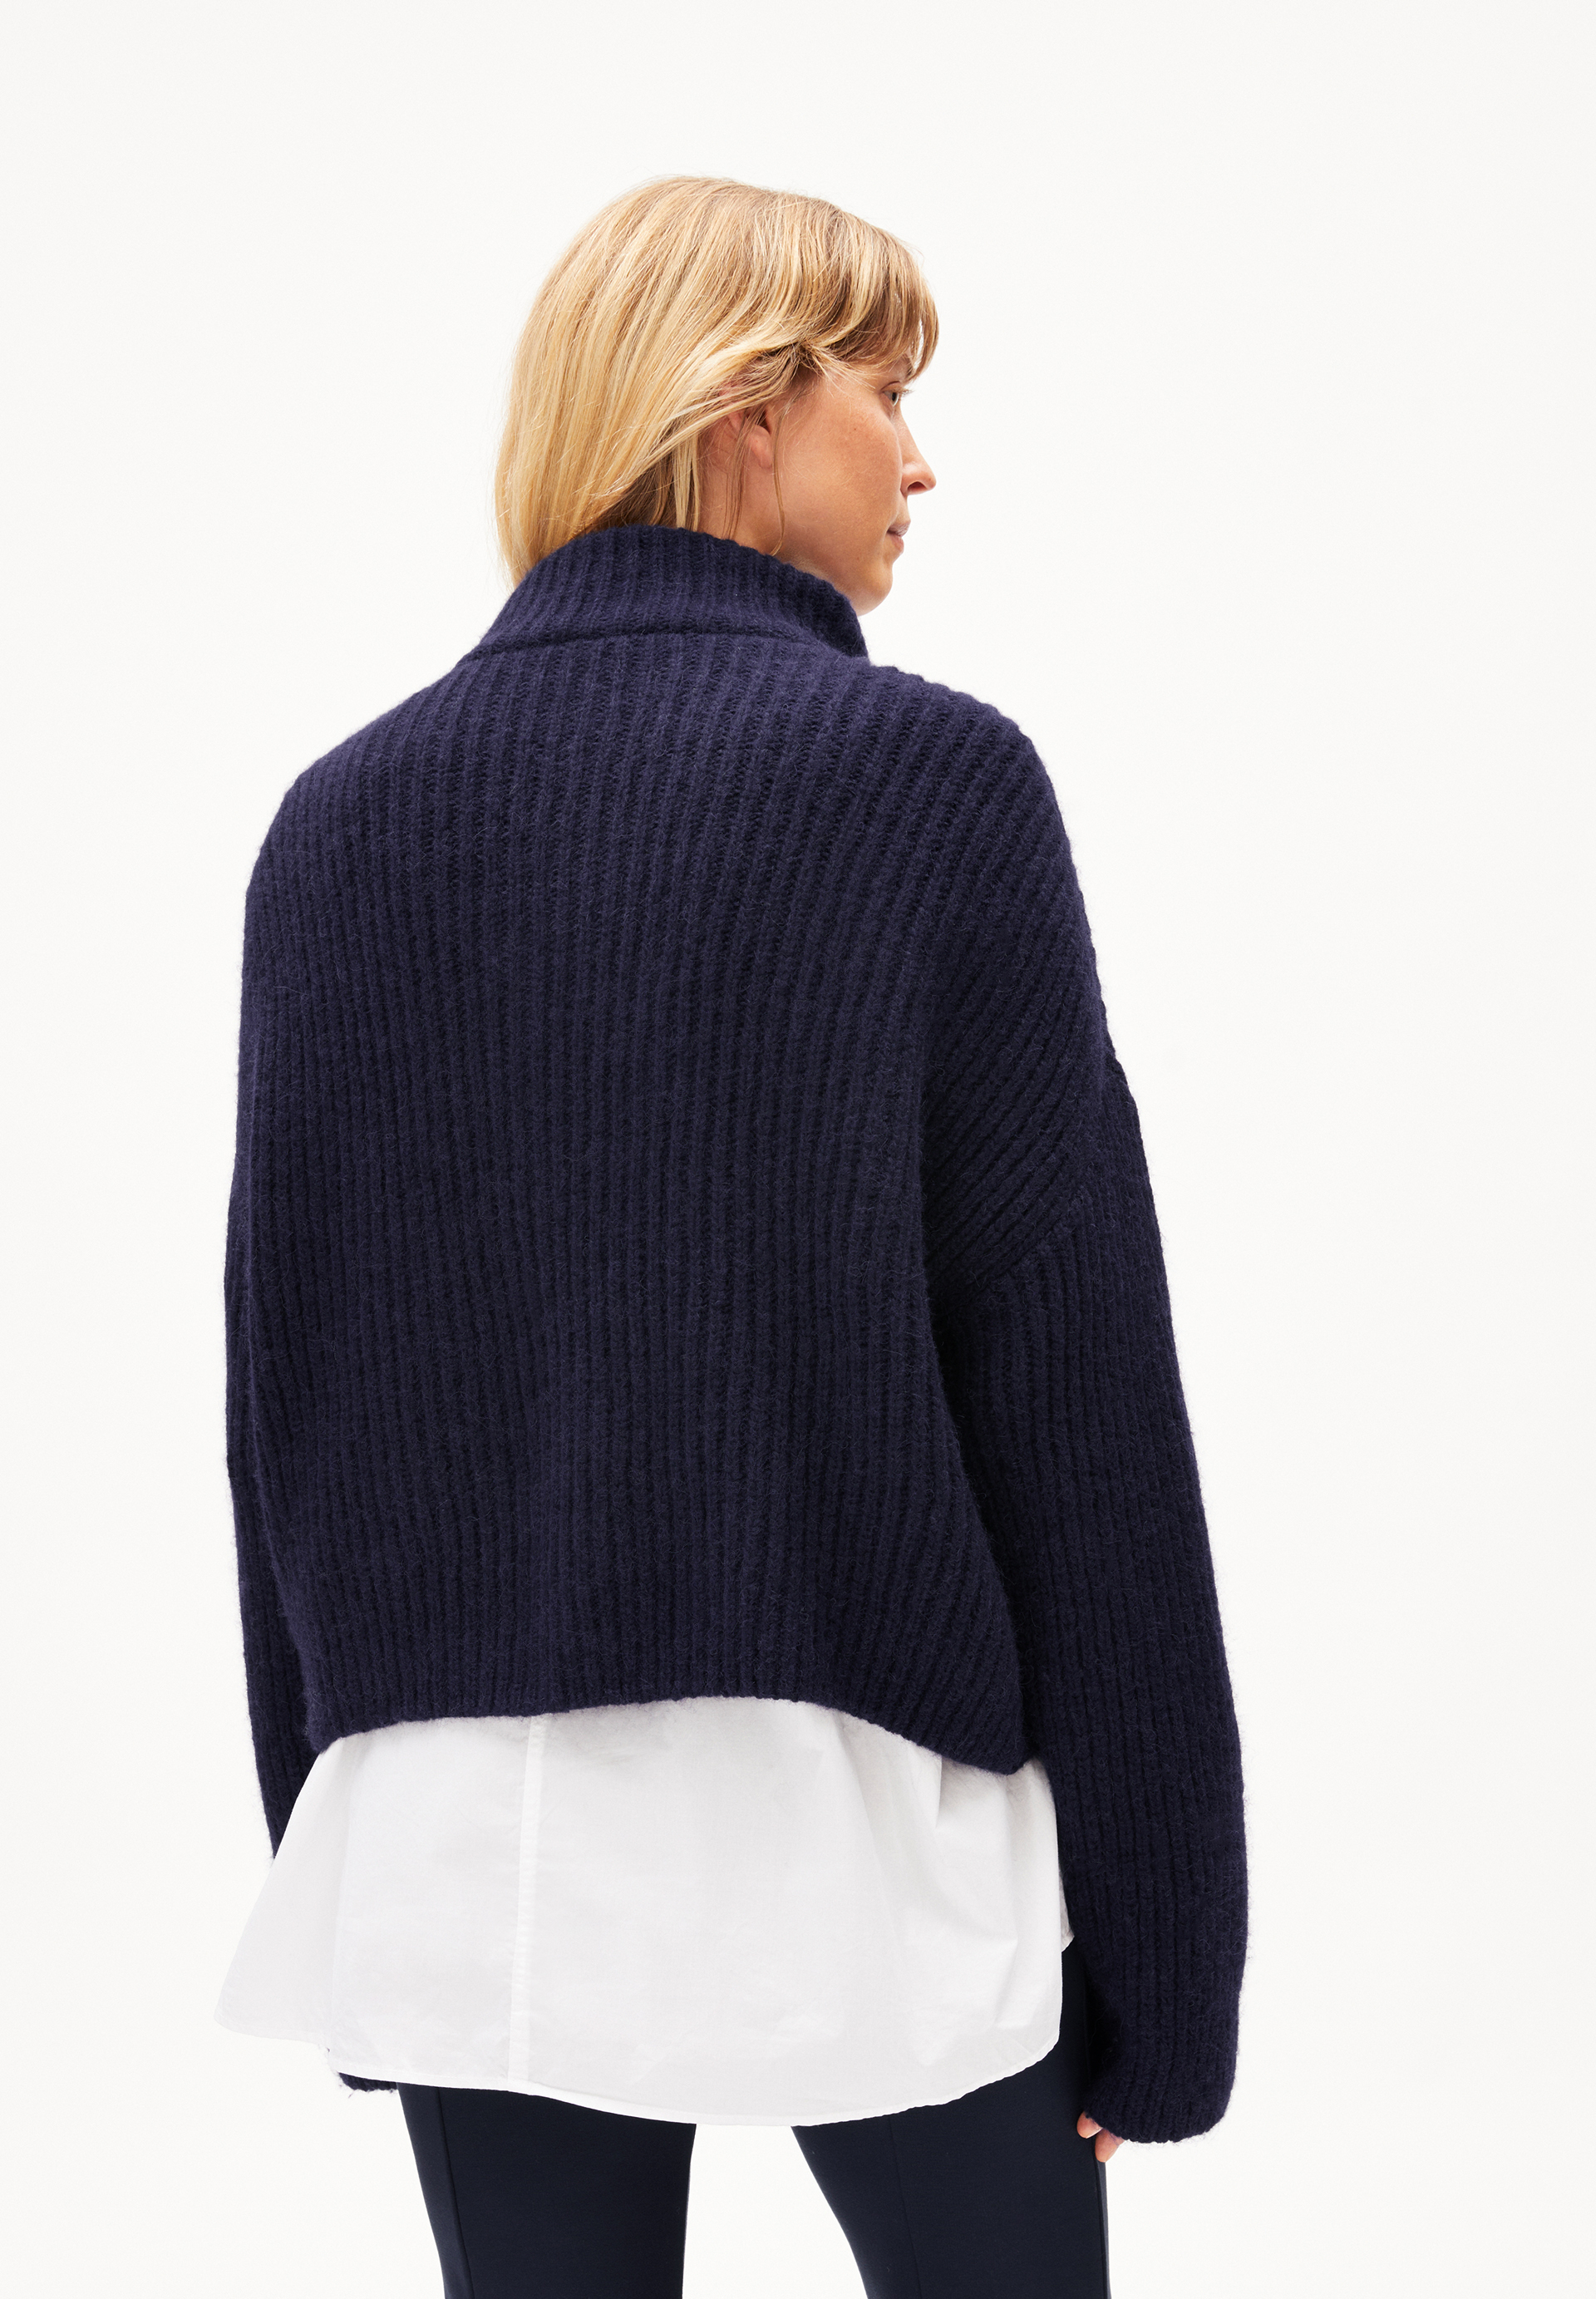 LUANIAA Sweater Oversized Fit made of Alpaca Wool Mix